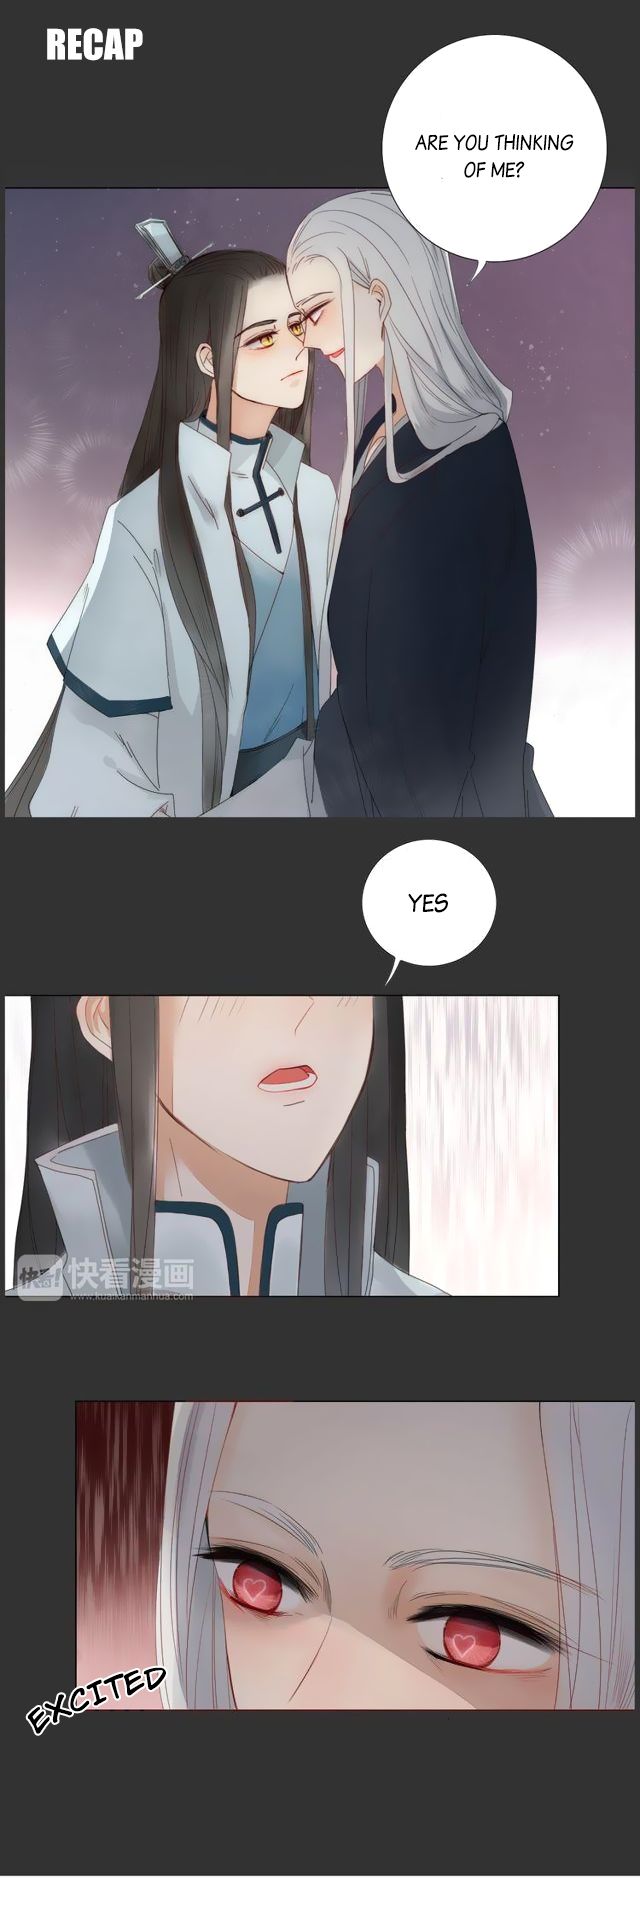 manhwa #recommendation  Anime, Anime couple kiss, Anime kiss